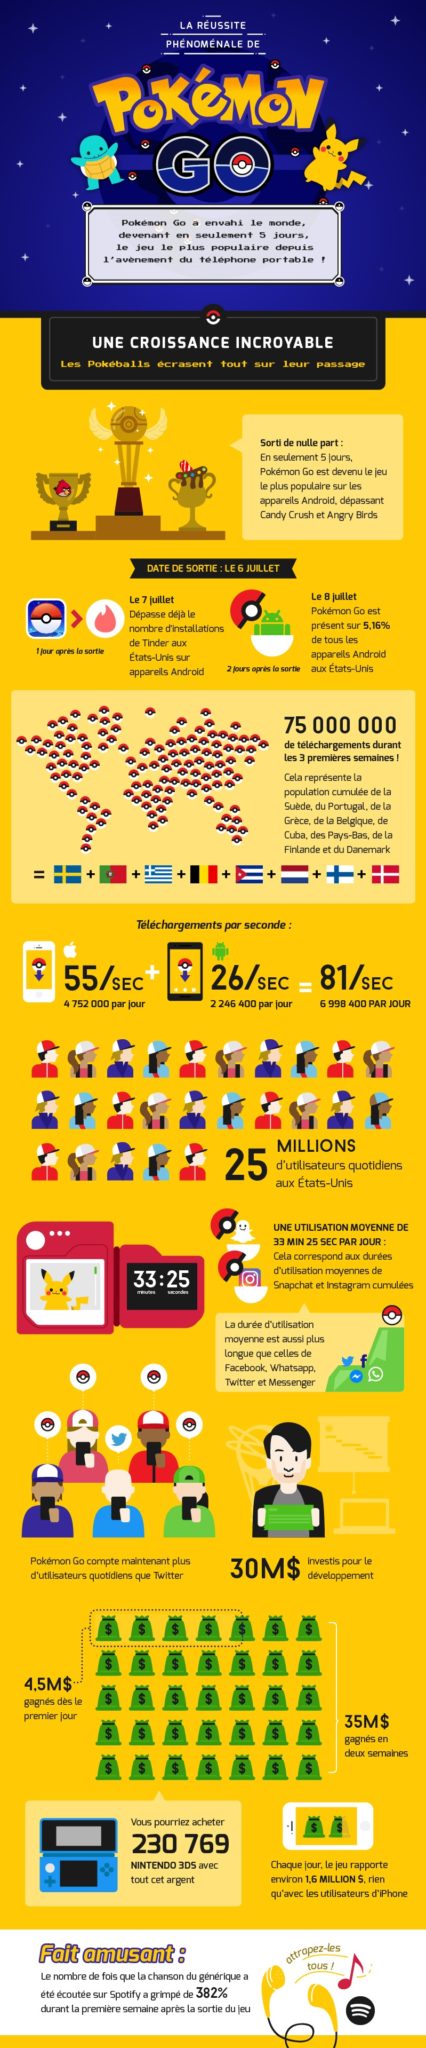 Pokémon Go - Global Success Infographic